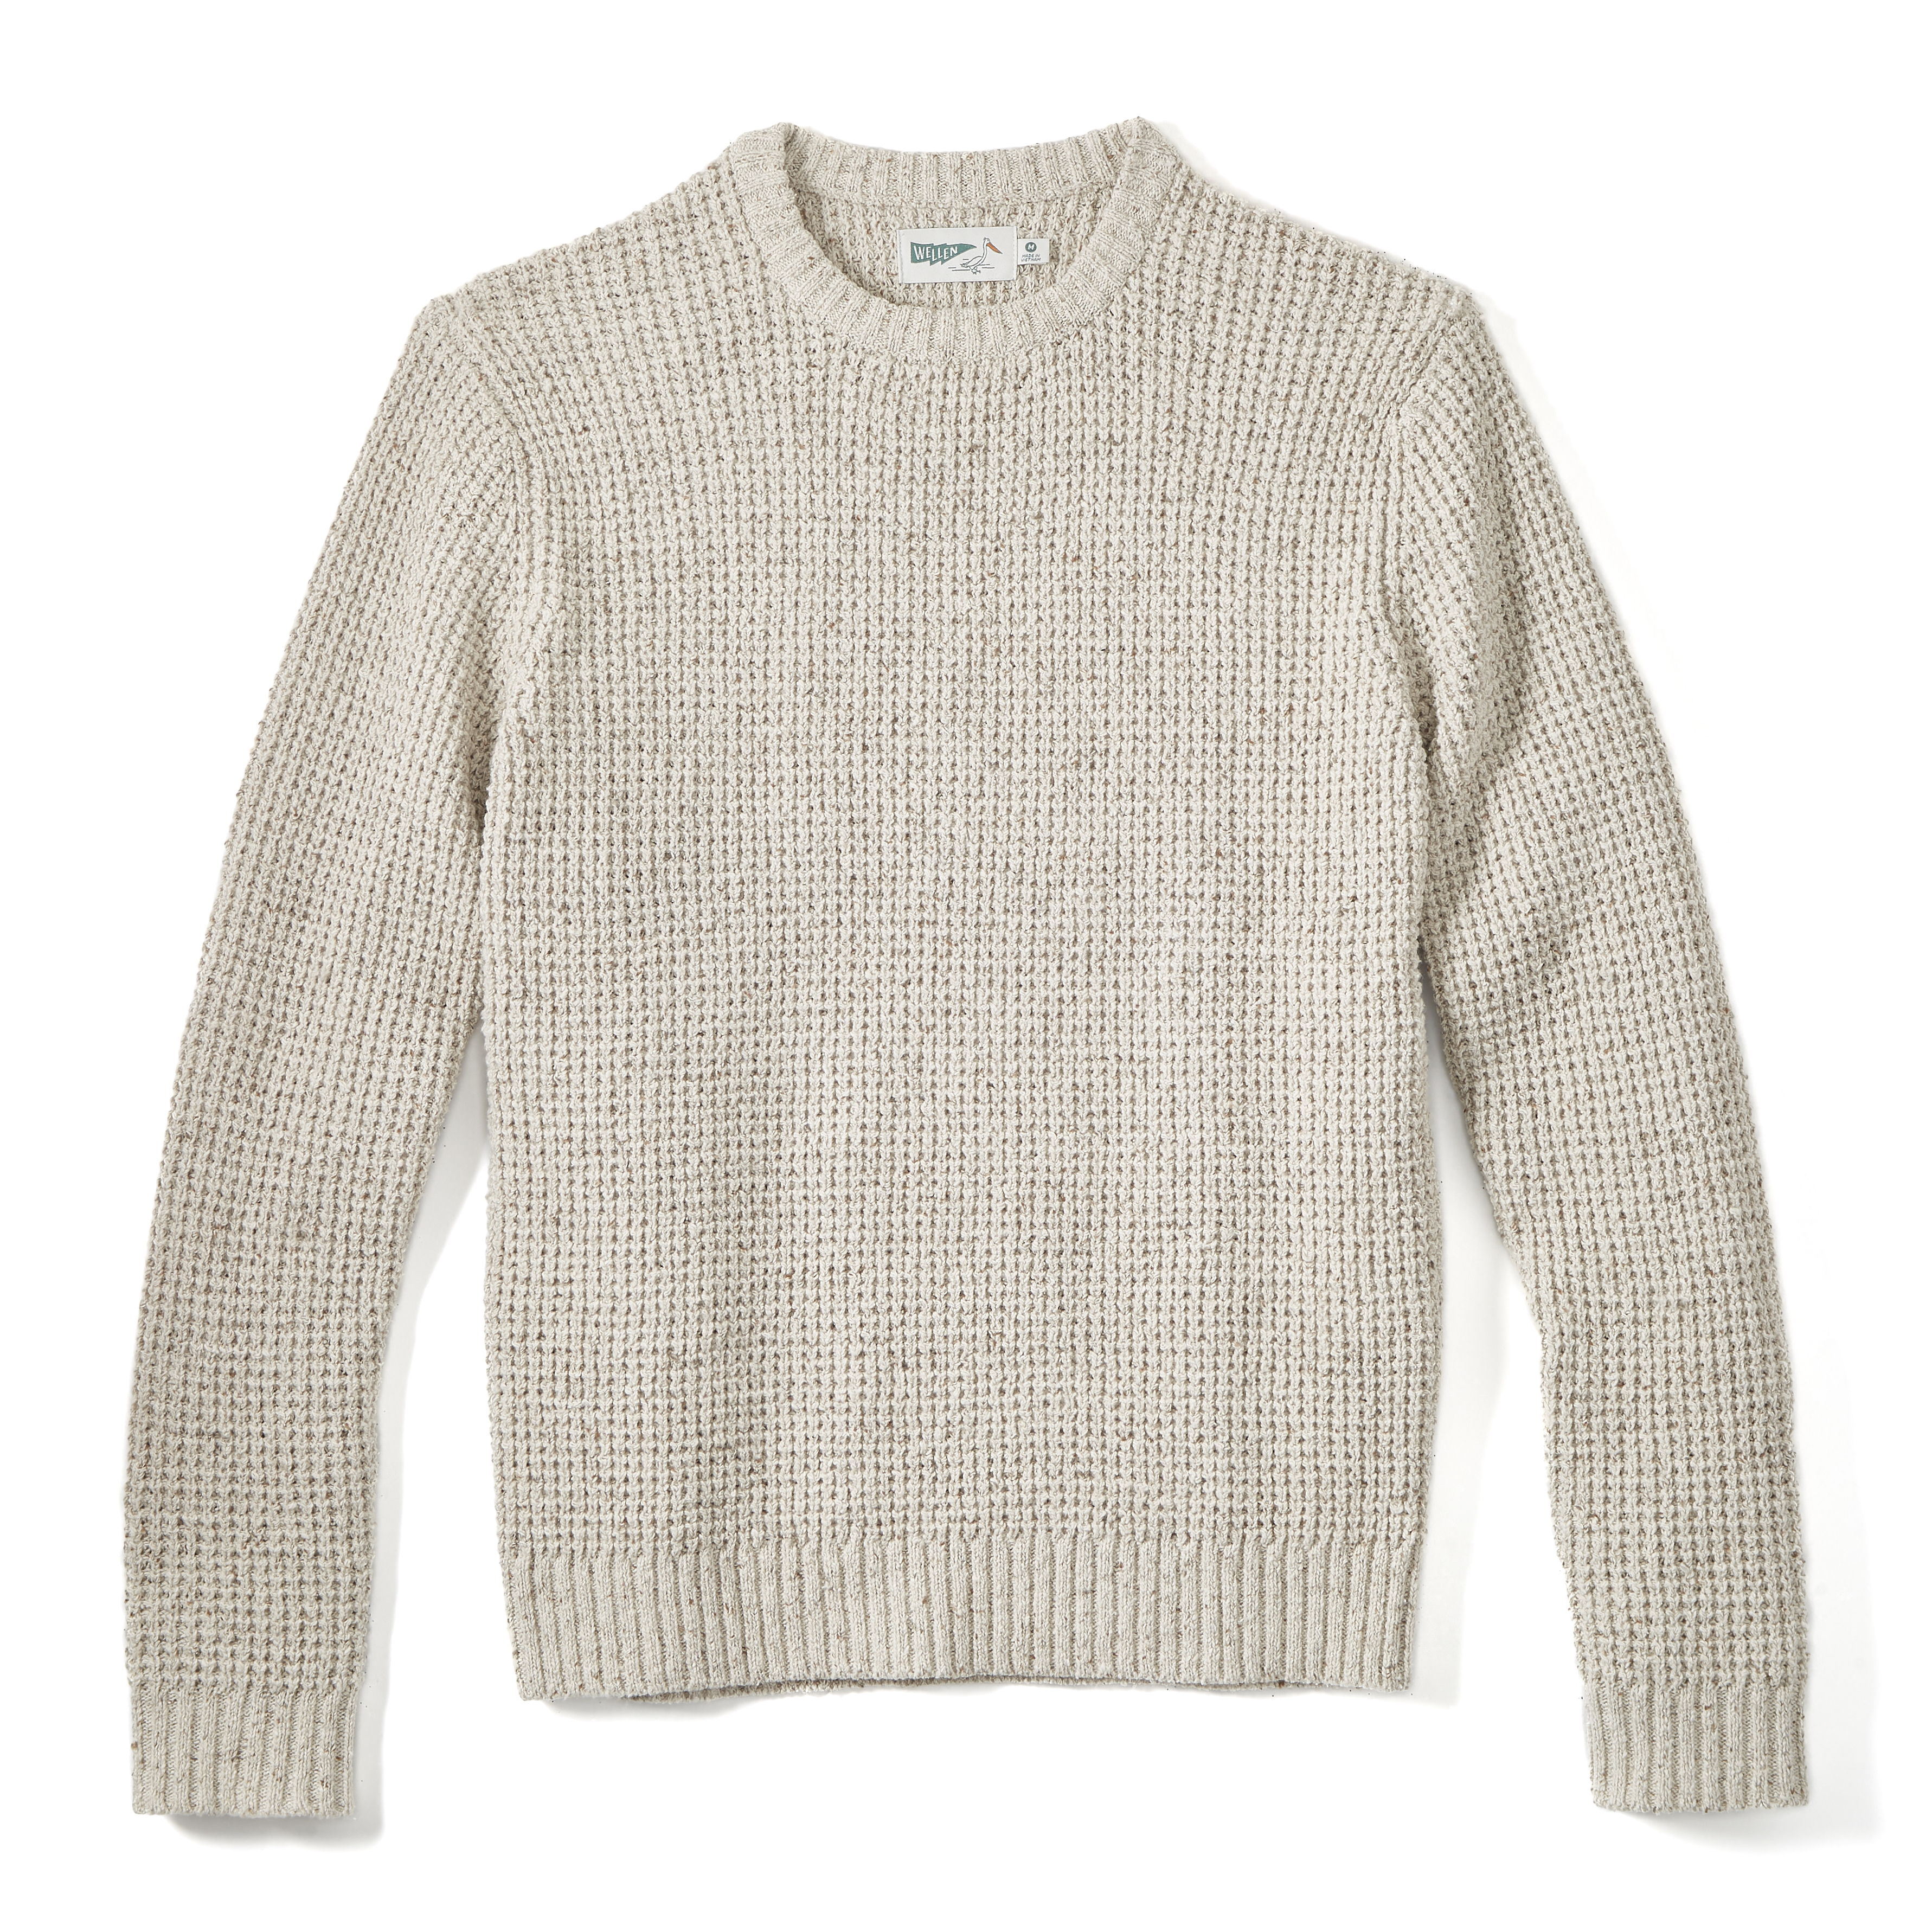 Wellen Recycled Cotton Headlands Sweater - Heather Bone | Crew 